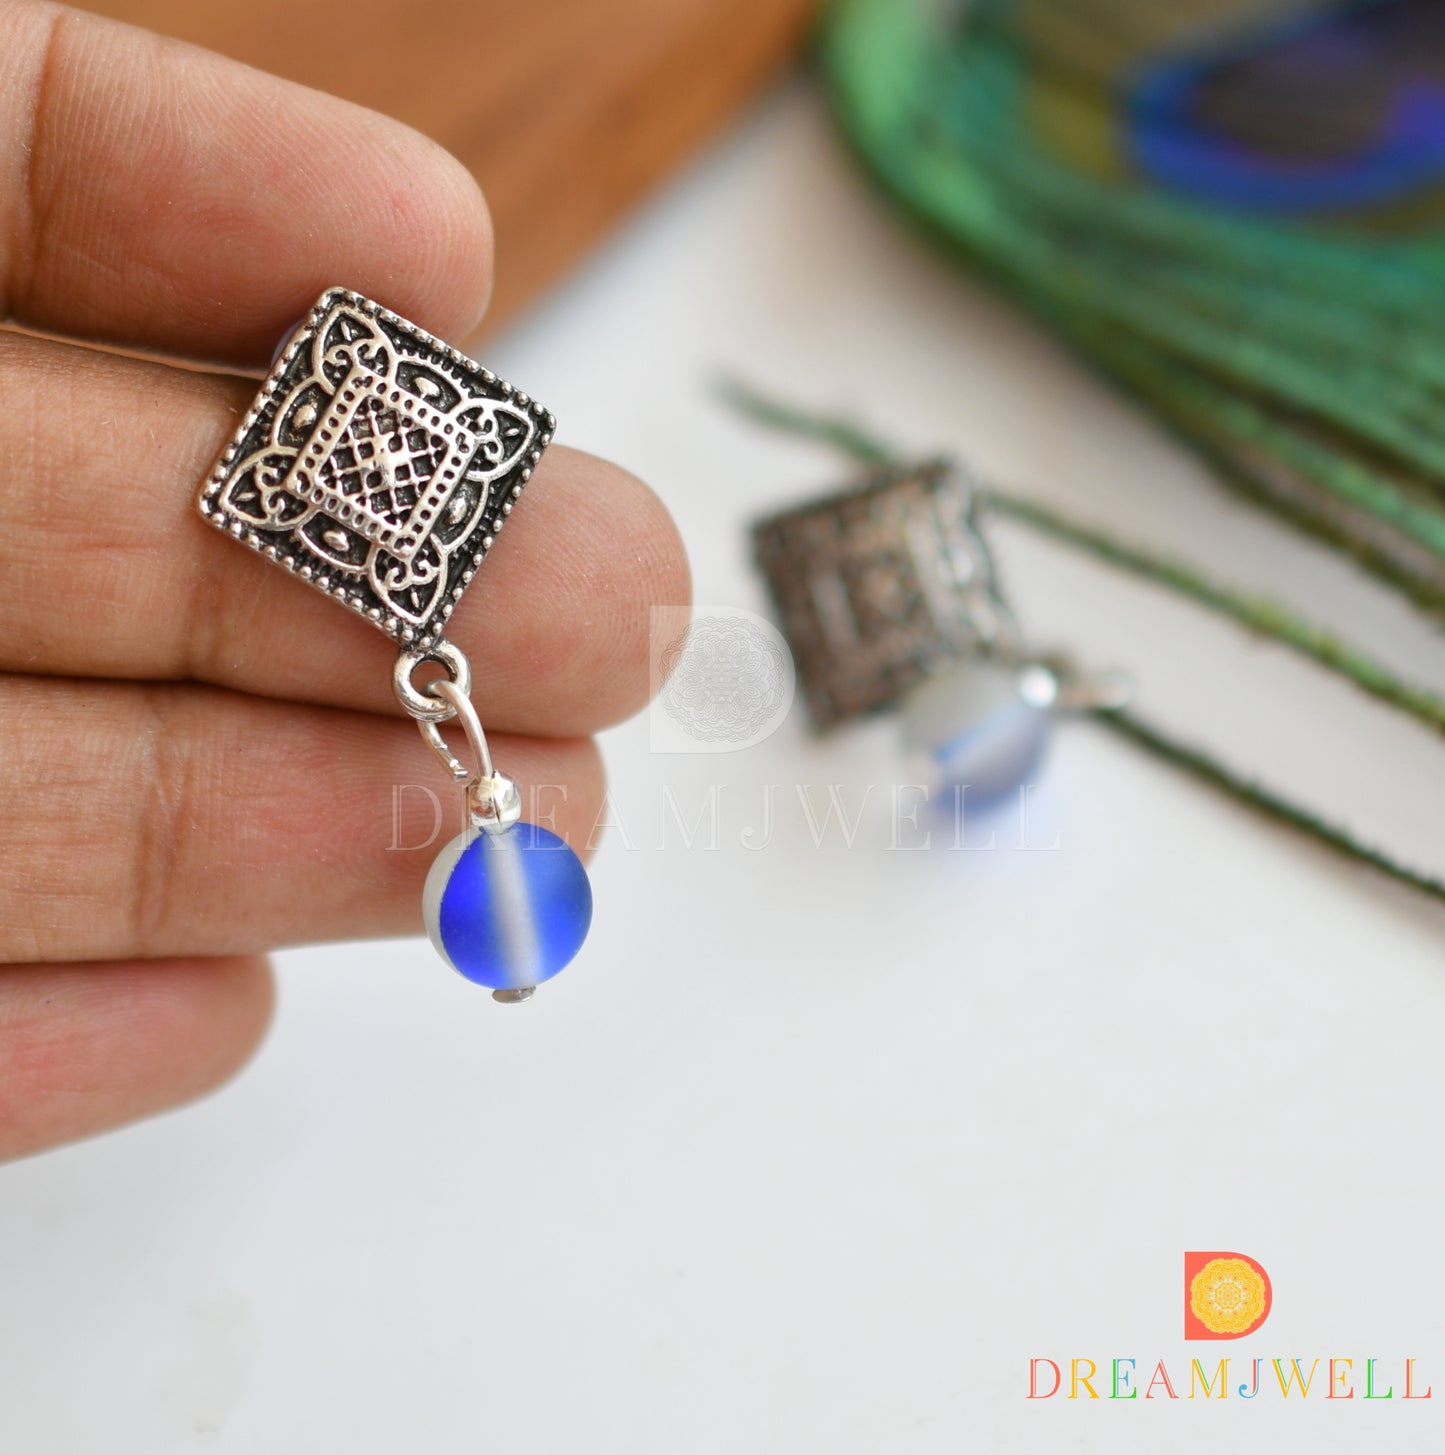 Silver tone blue mistik stone beads necklace set with sliced agate pendant dj-36370